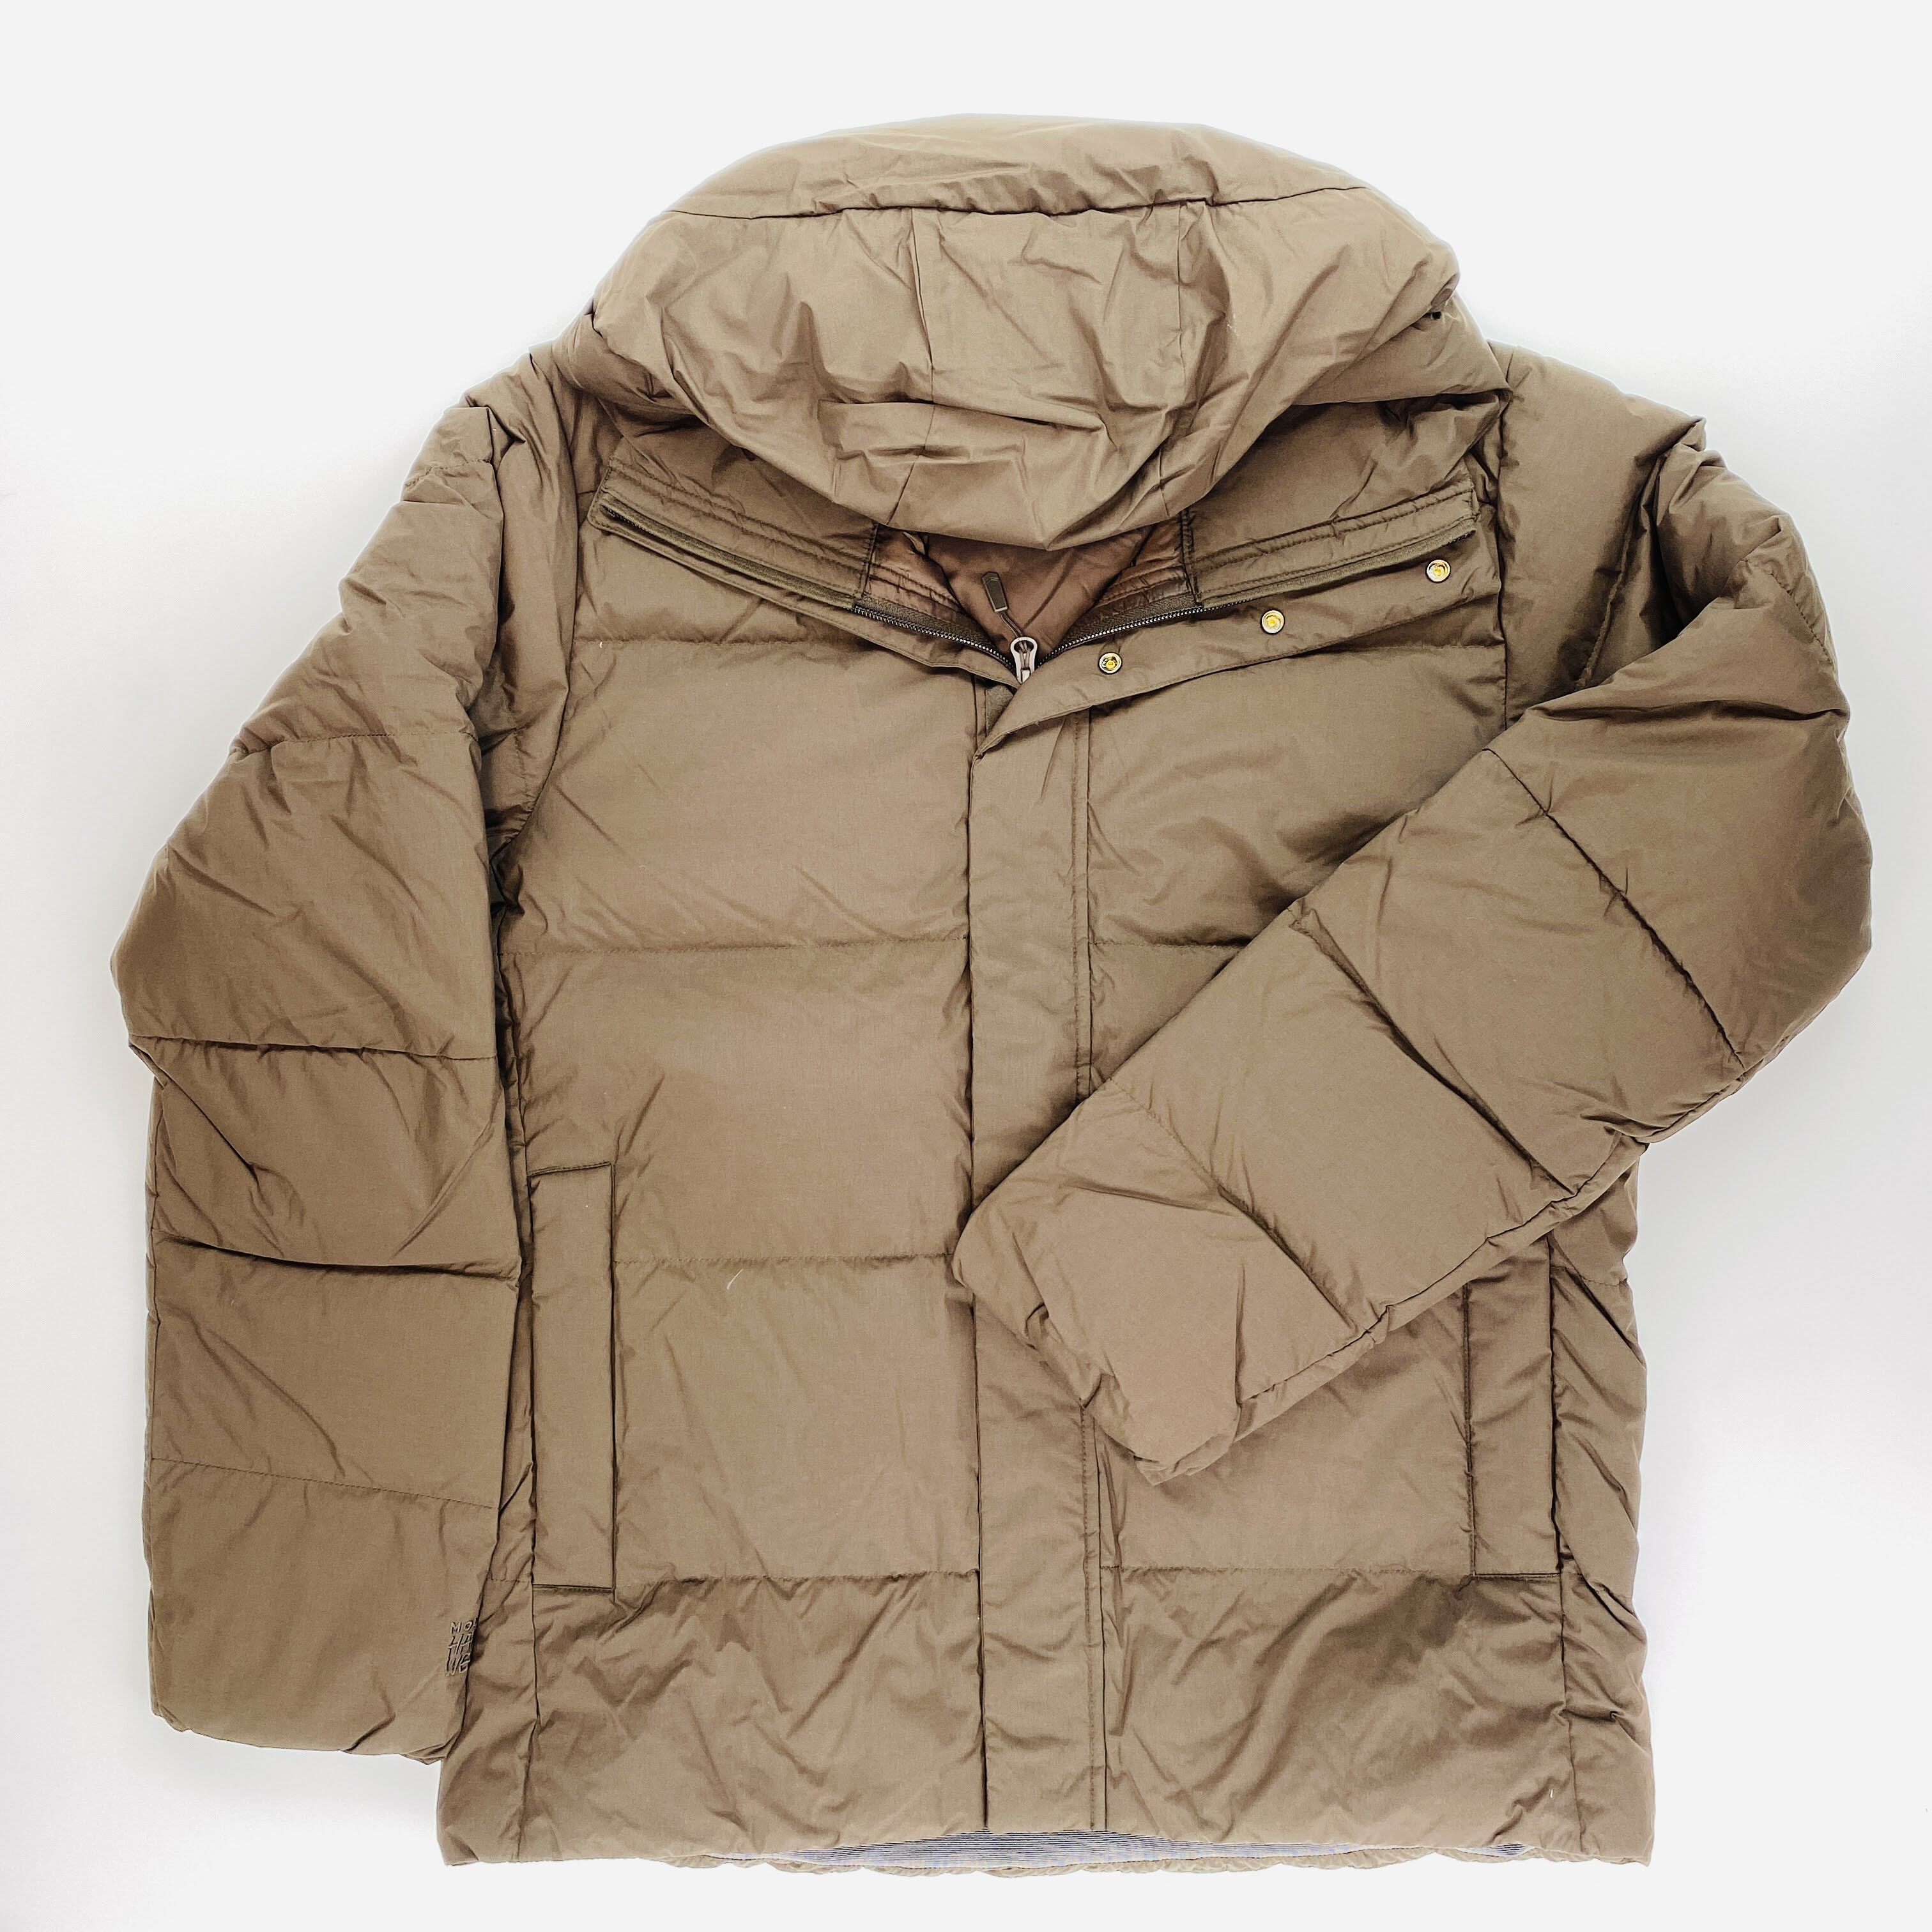 Mountain Hardwear Glacial Storm Man Jacket - Giacca in piumino di seconda mano - Uomo - Marrone - S | Hardloop